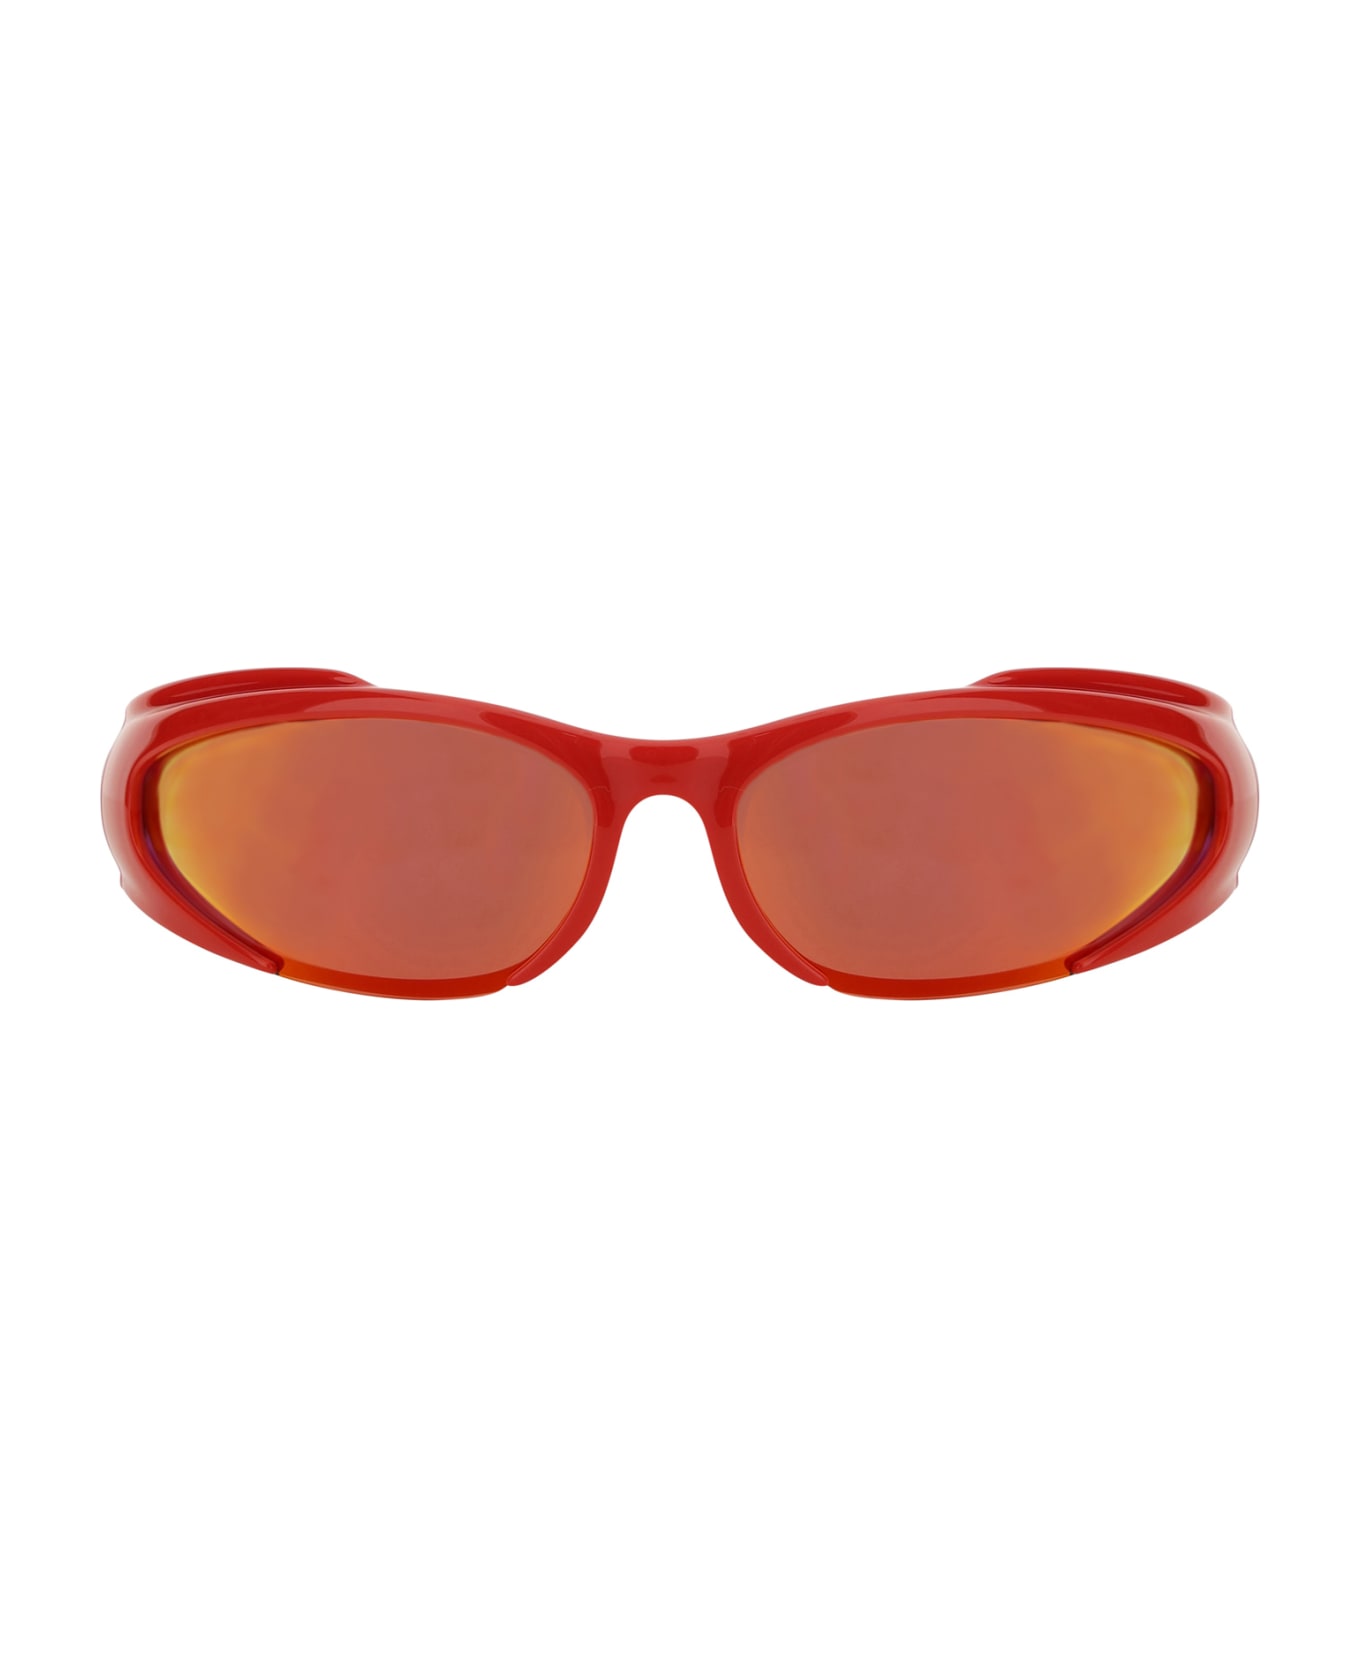 Balenciaga Eyewear Rex Xpand Sunglasses - Red/mirror Red